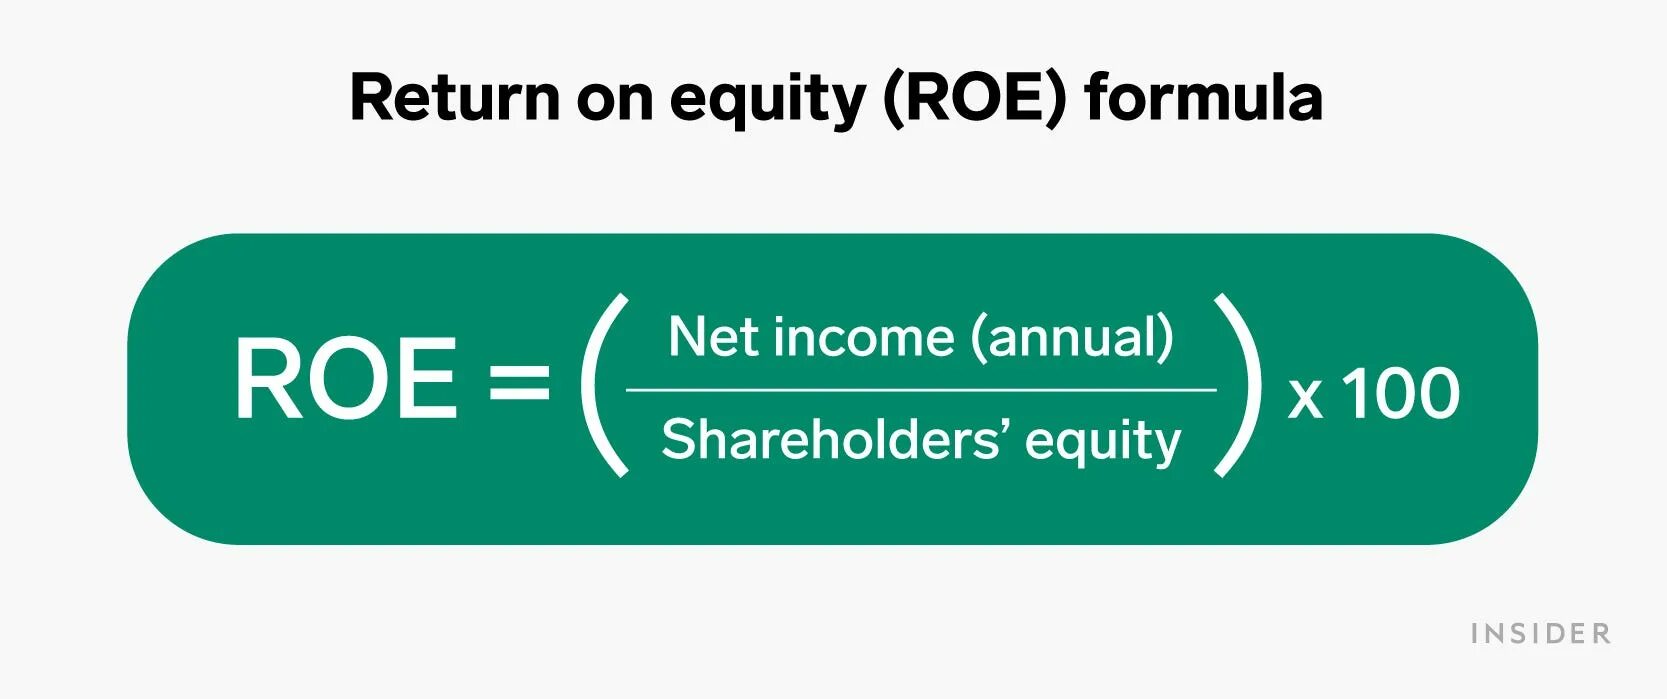 Roe формула. Roe Return on Equity. Equity формула. Net Equity формула.